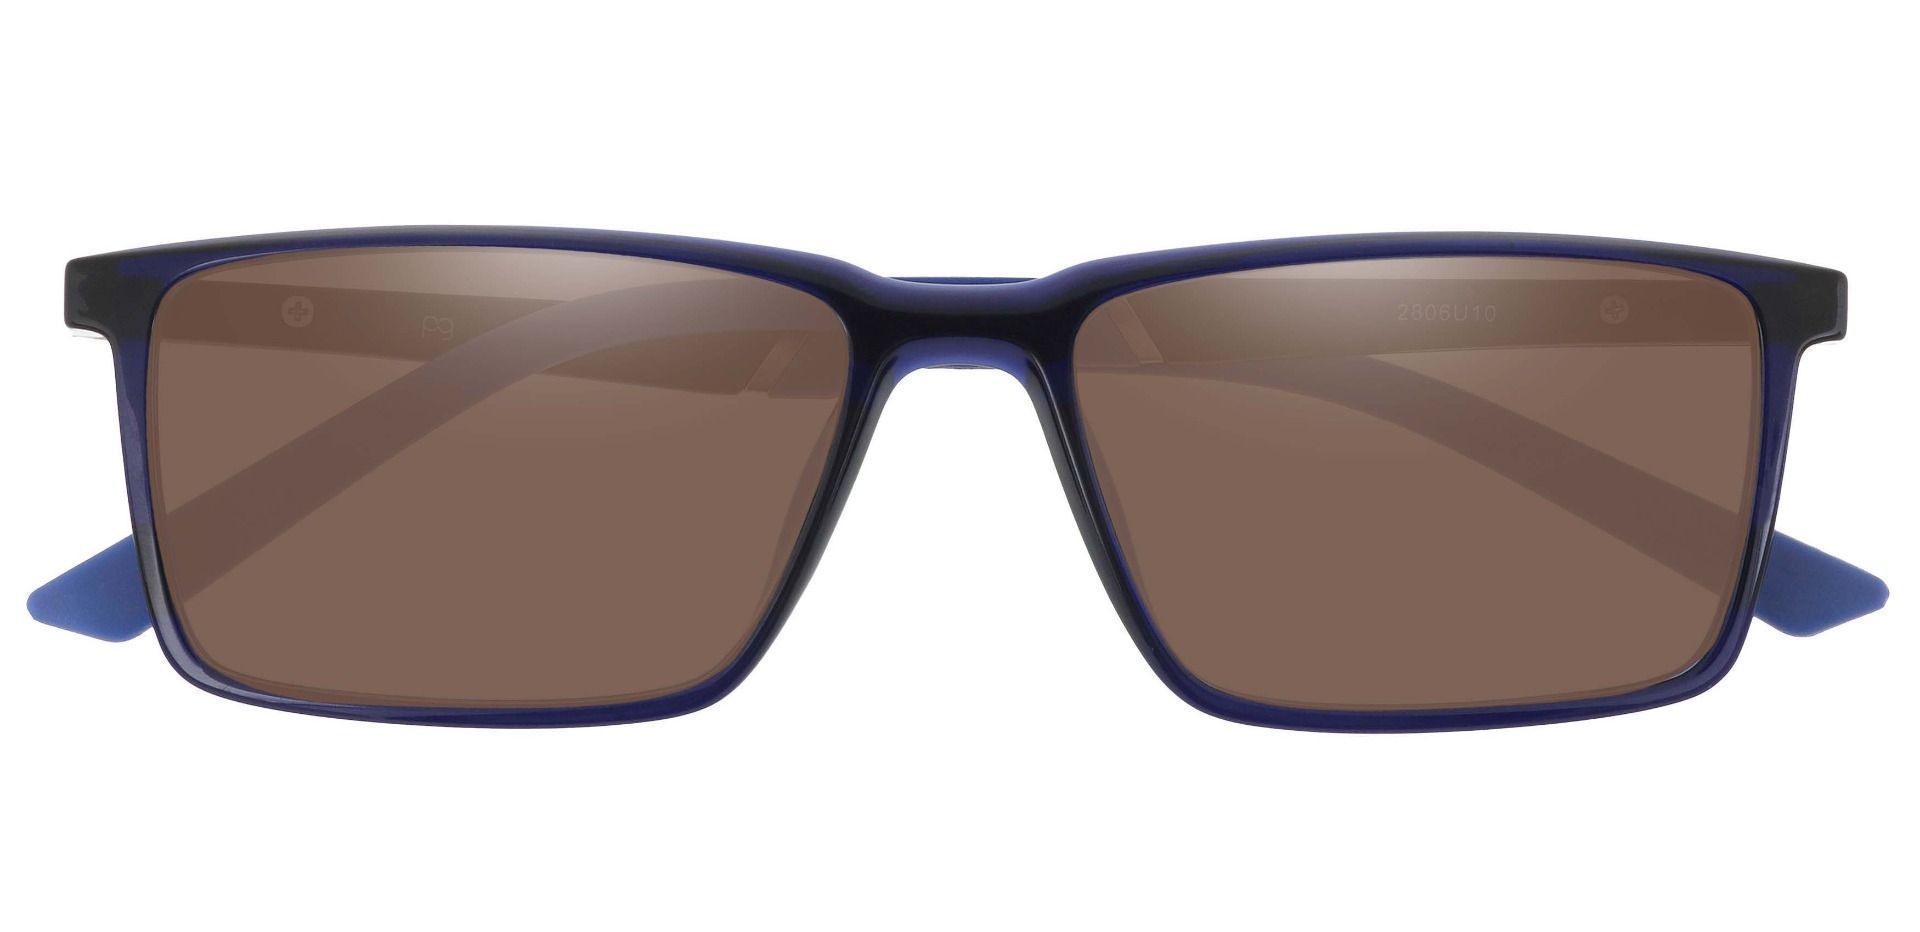 Hawk Rectangle Prescription Sunglasses - Blue Frame With Brown Lenses